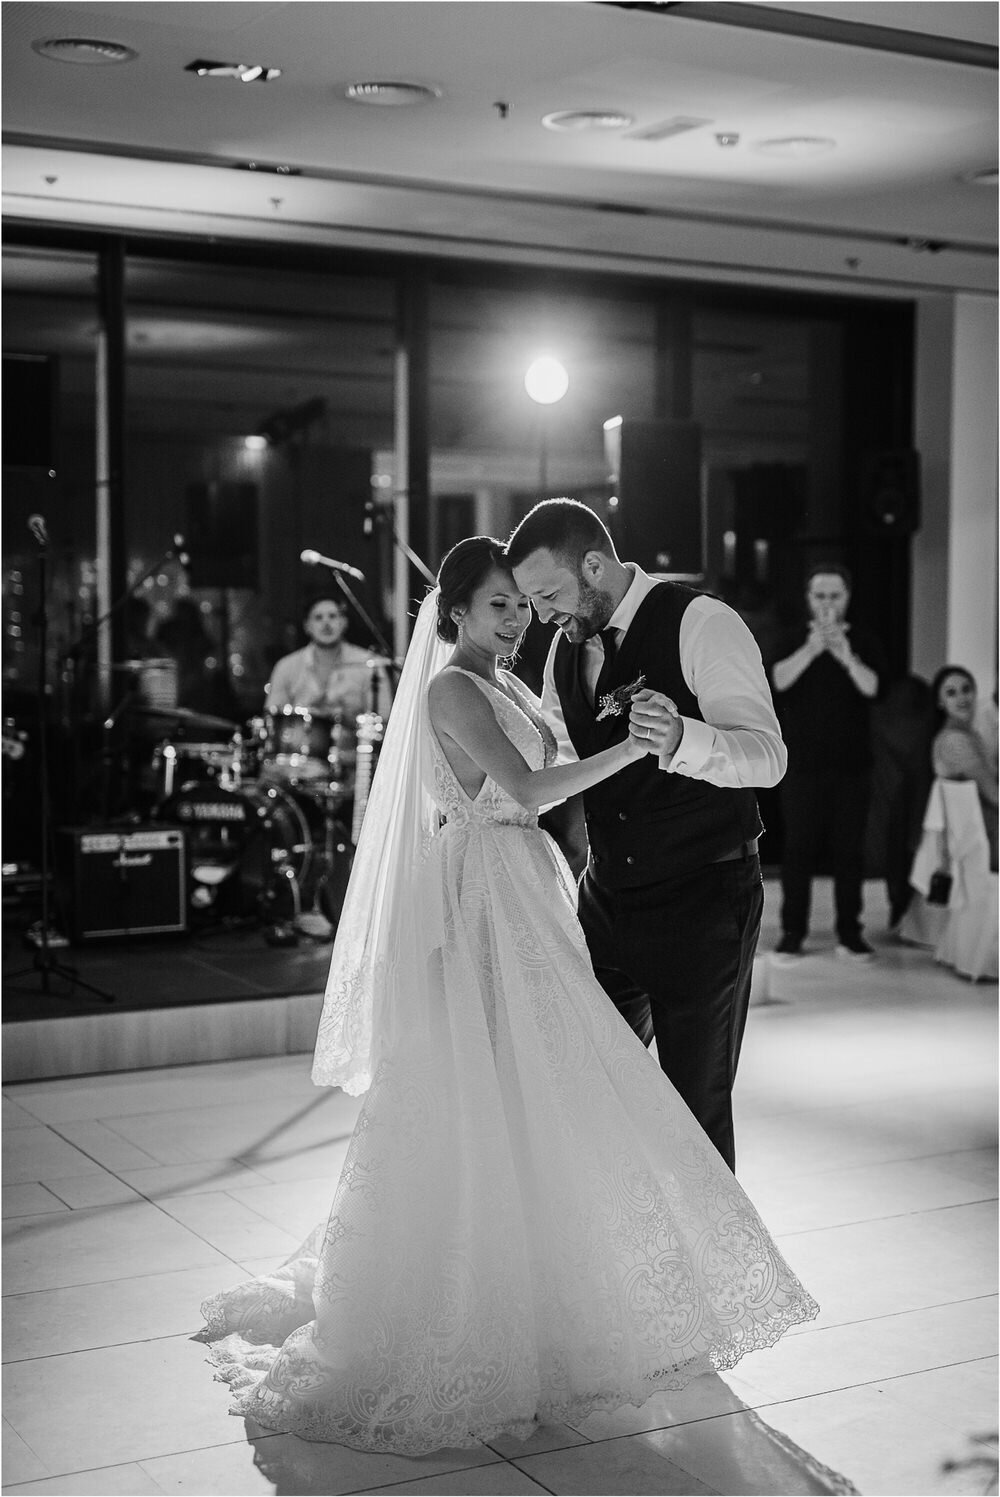 best of wedding photography 2019 photographer italy ireland tuscany santorini greece spain barcelona lake como chateux scotland destination wedding 0084.jpg